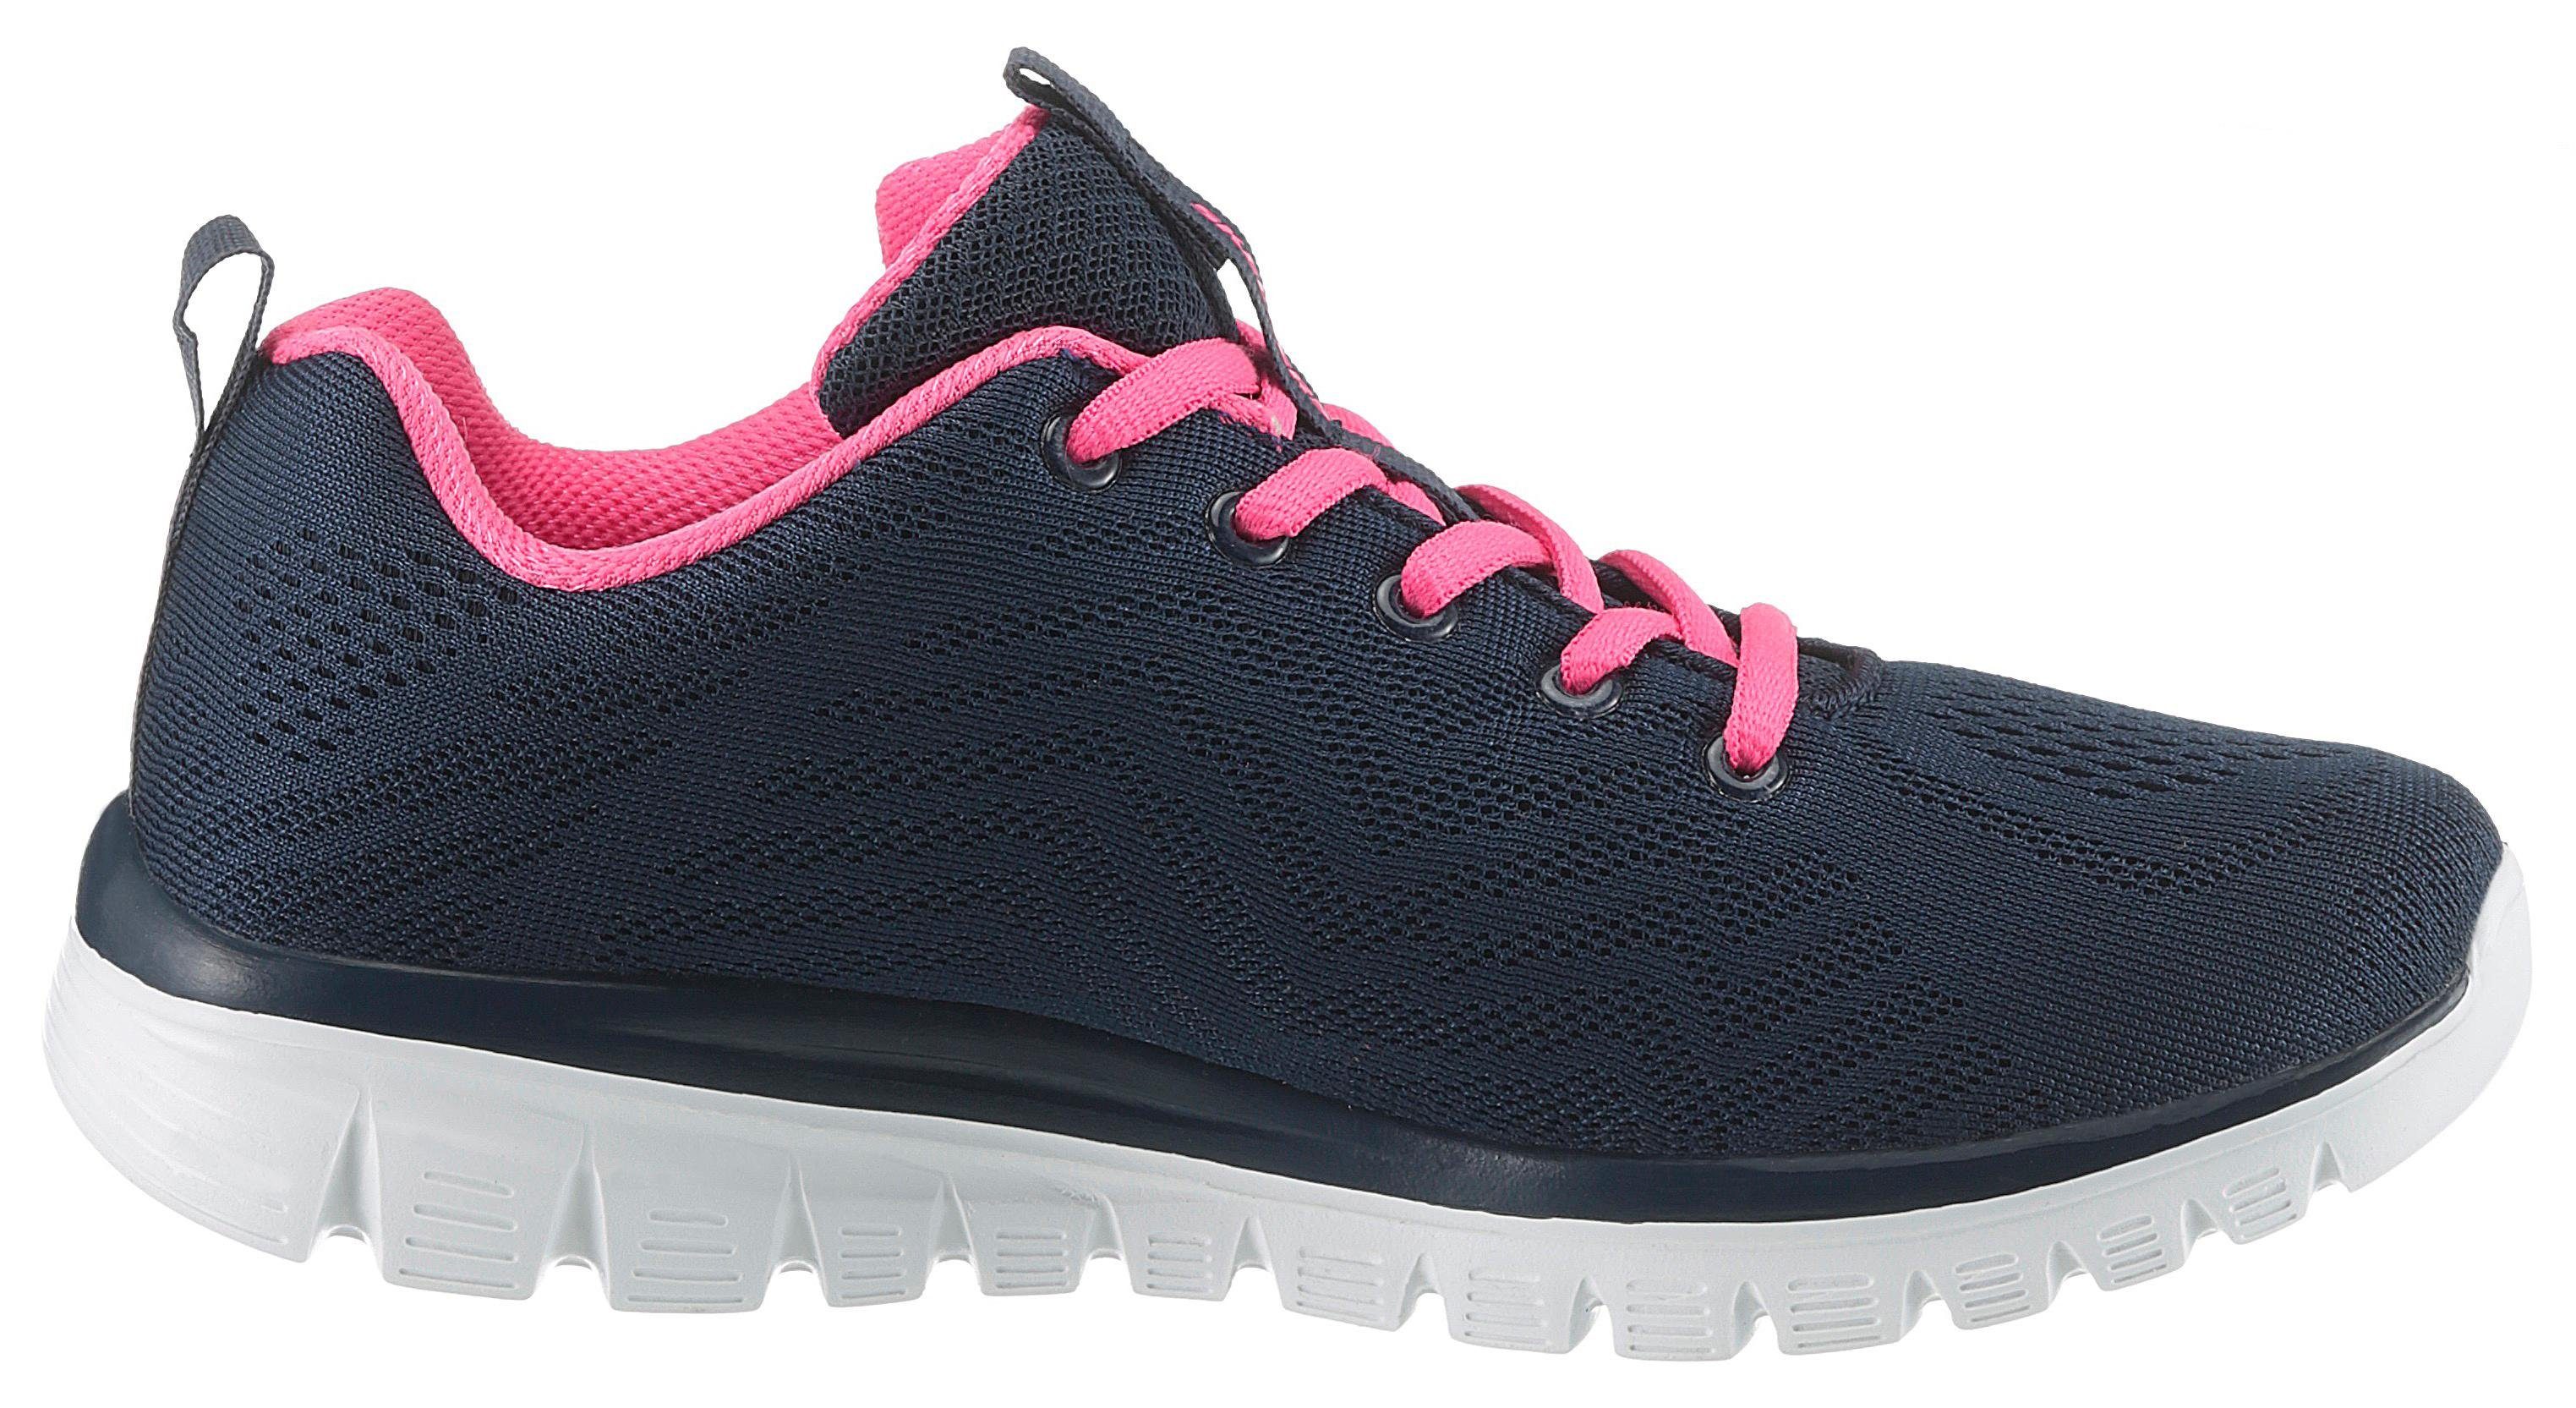 Sneaker - Skechers Graceful Get mit Foam navy-pink durch Memory Dämpfung Connected